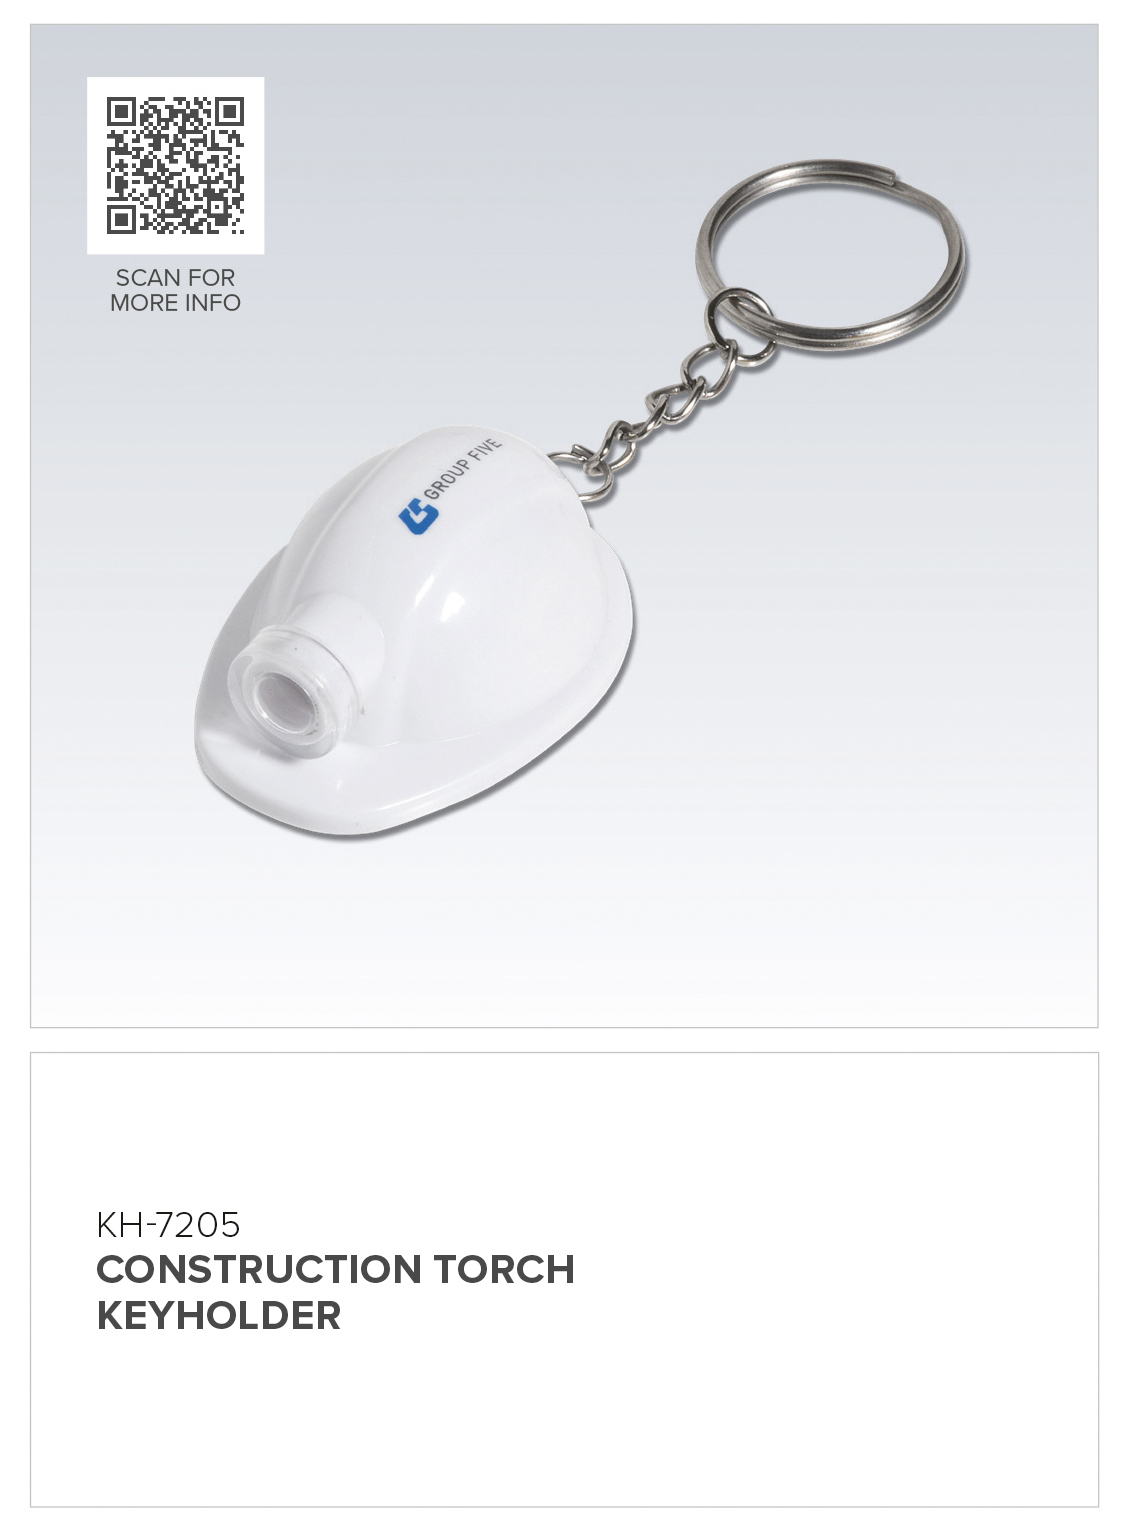 Construction Torch Keyholder